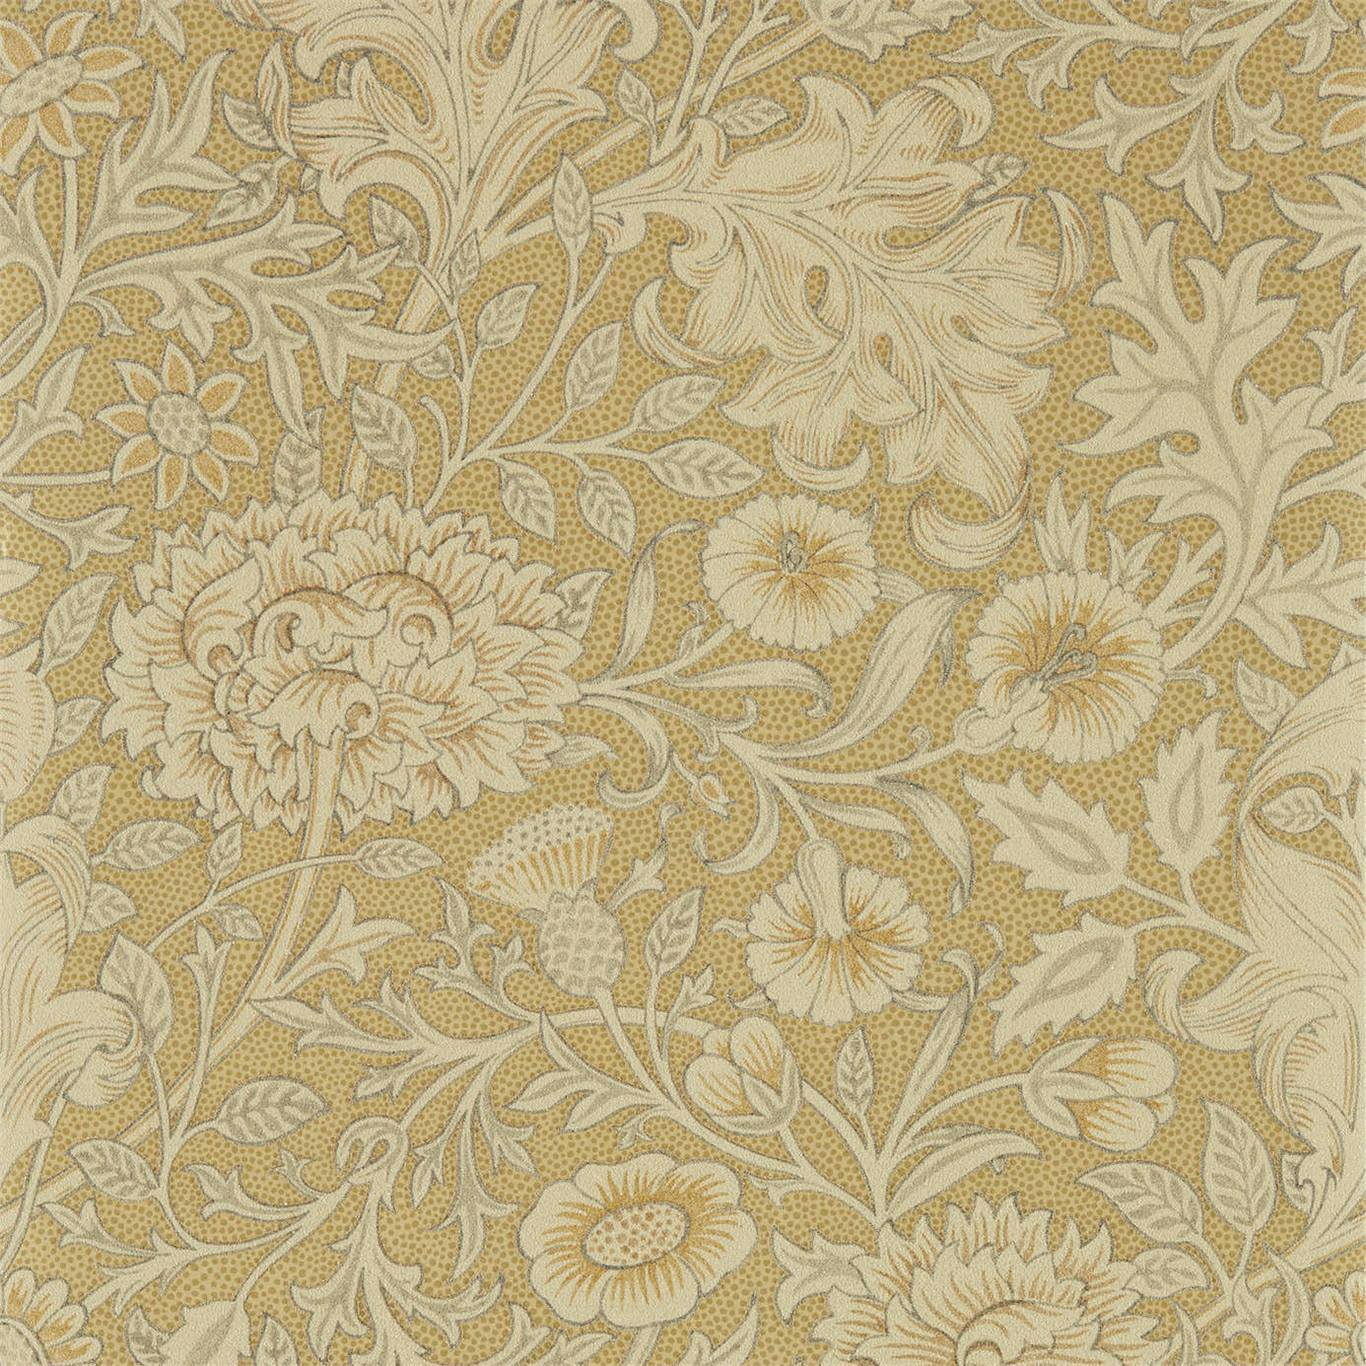 Double Bough Antique Gold Wallpaper DMSW216681 by Morris & Co